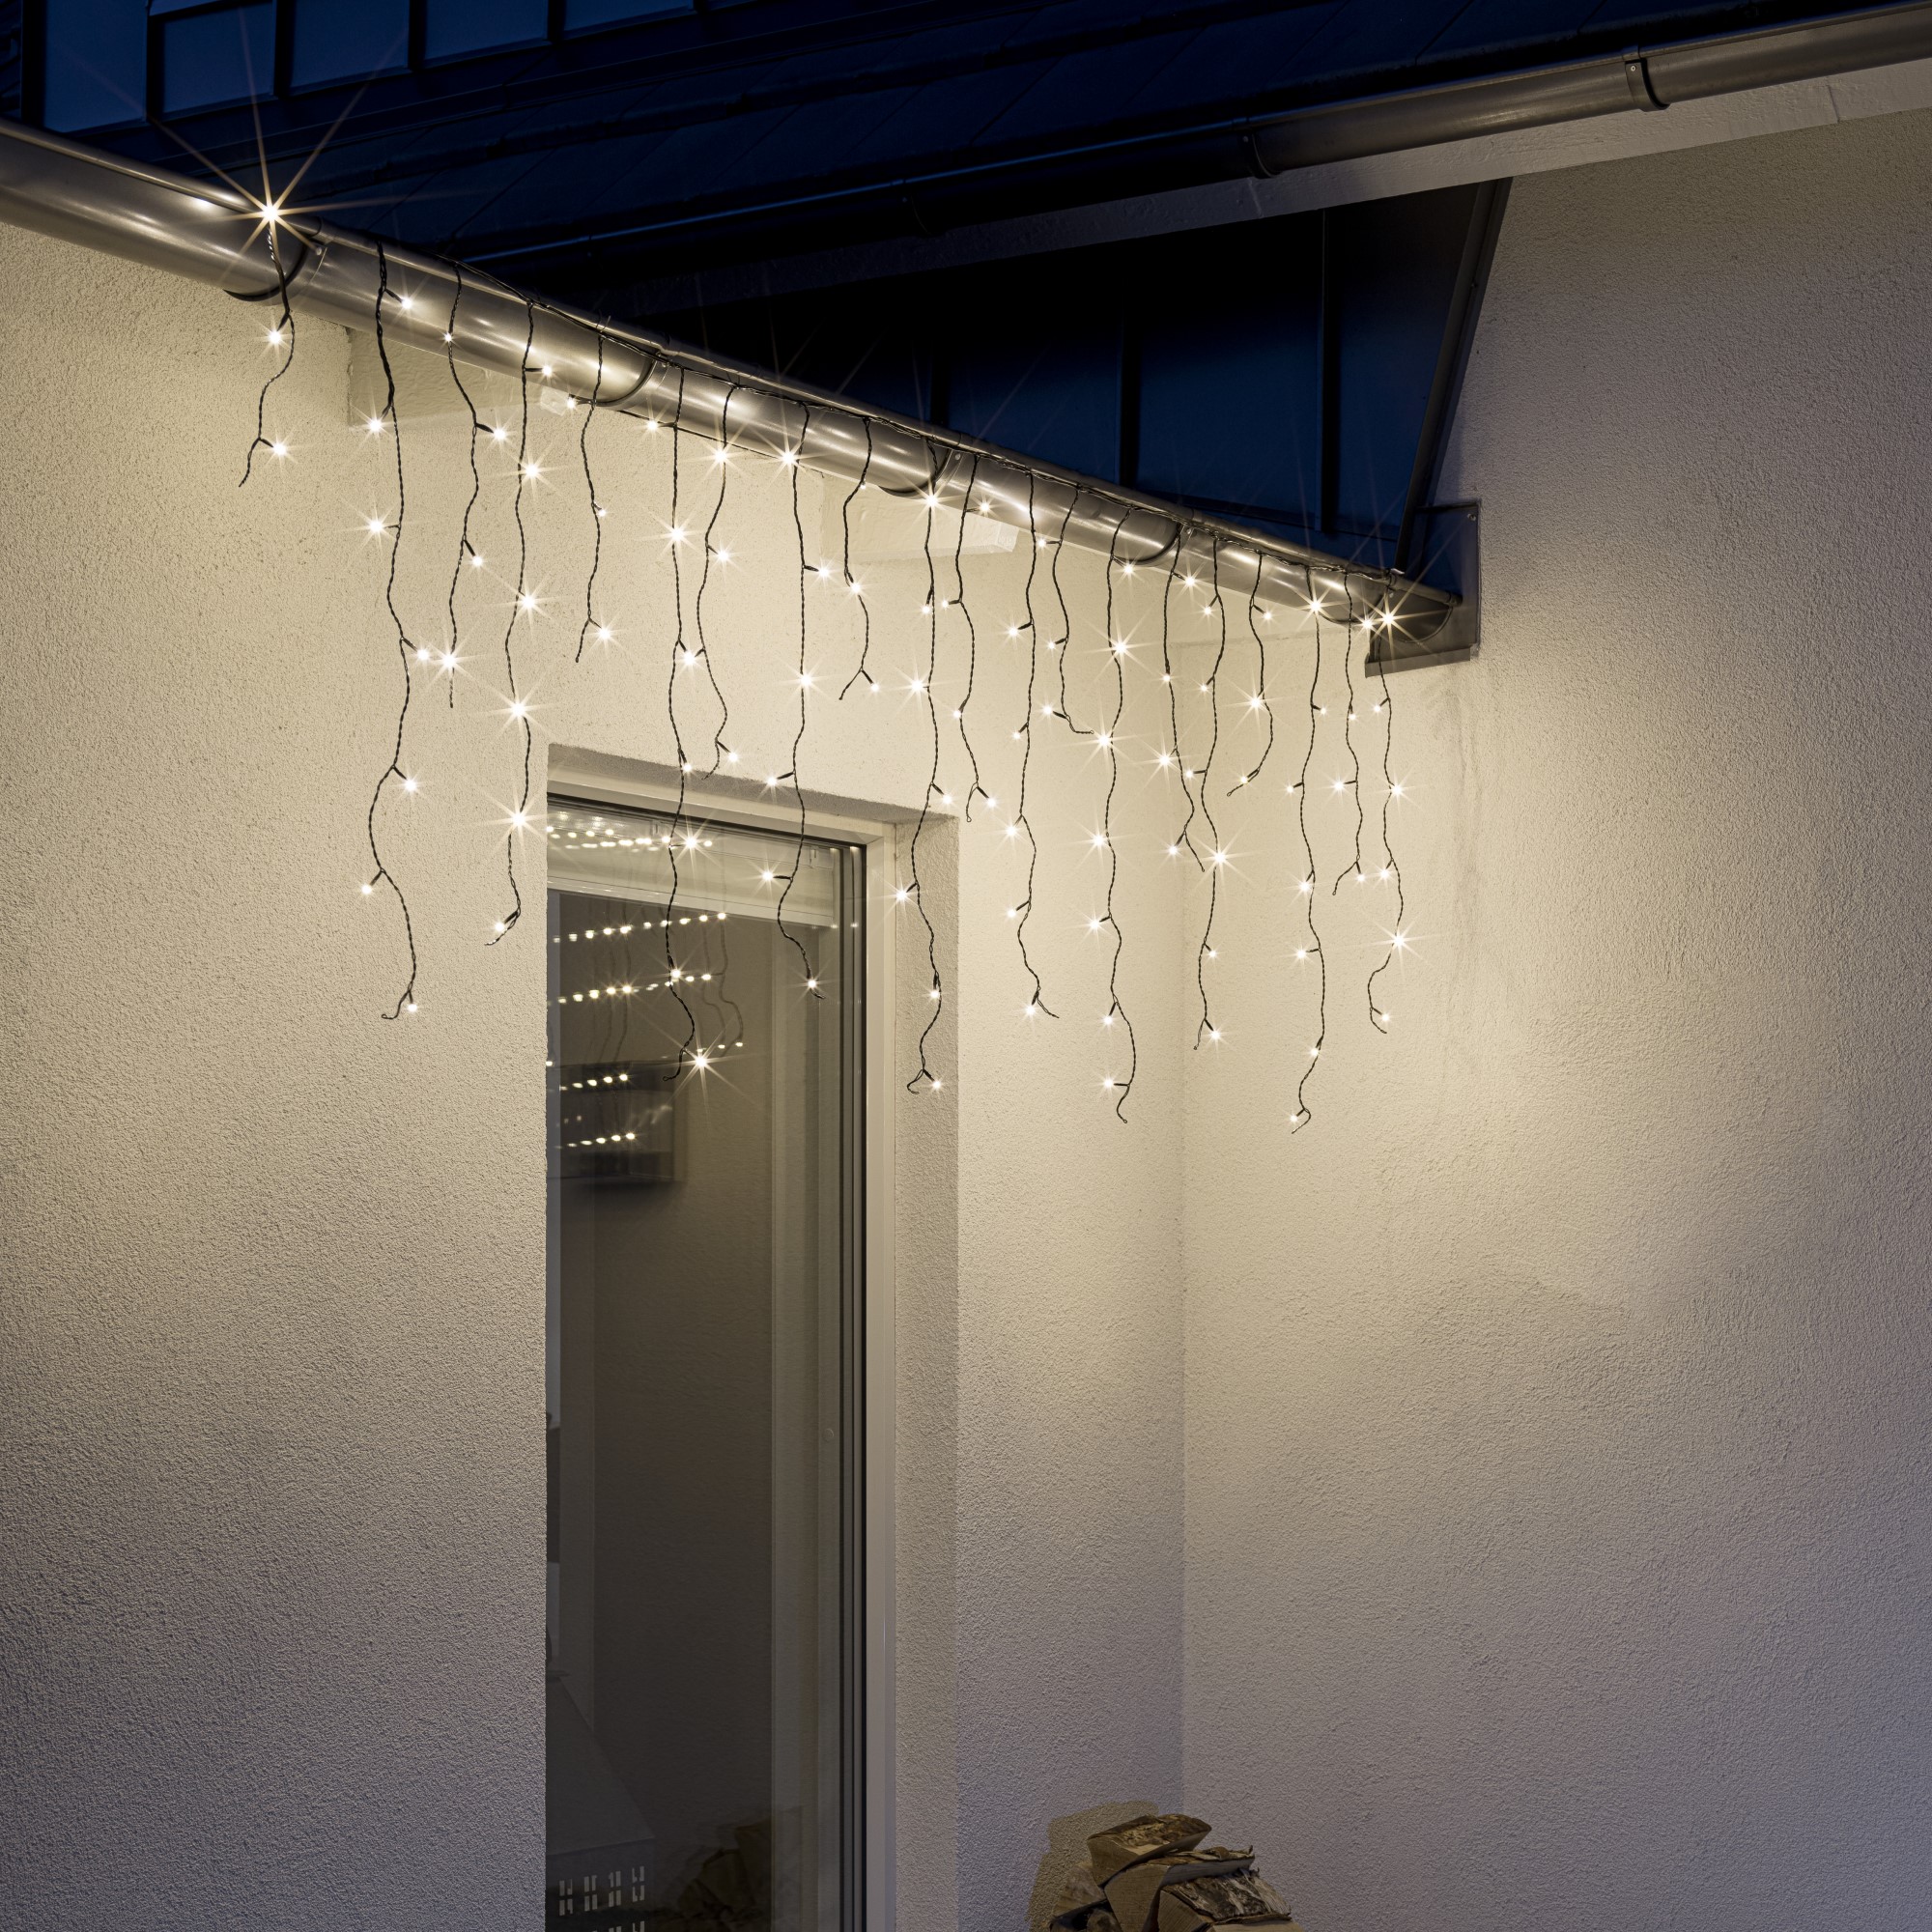 Konstsmide LED System 31V, LED Ice Rain Light Curtain frosted, 100 warm white LEDs, IP44